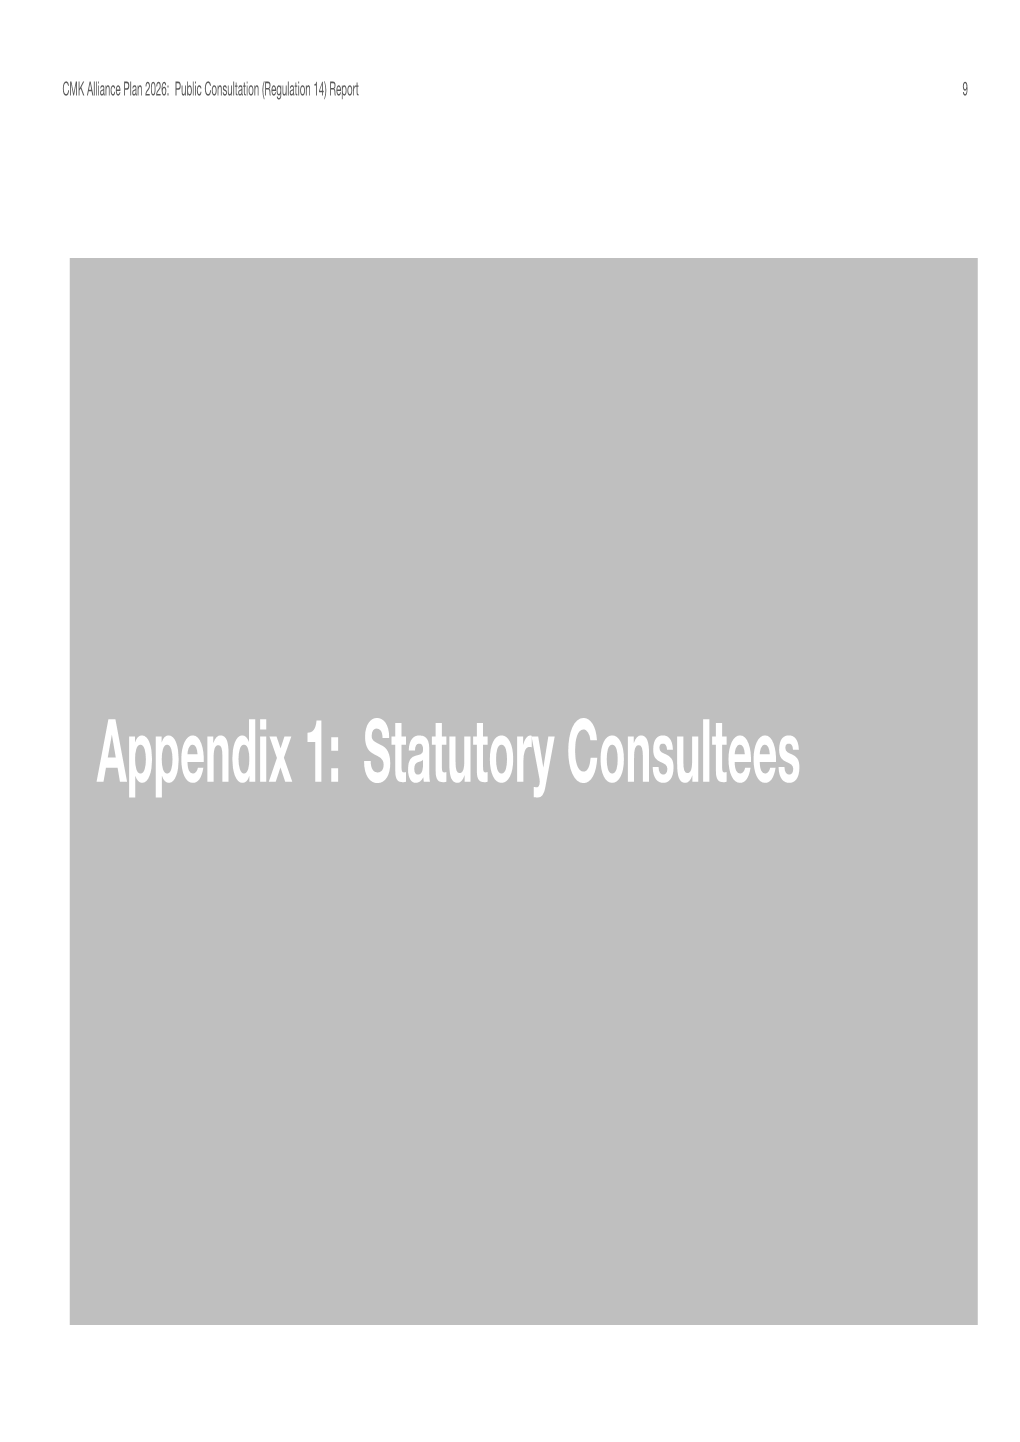 Appendix 1: Statutory Consultees